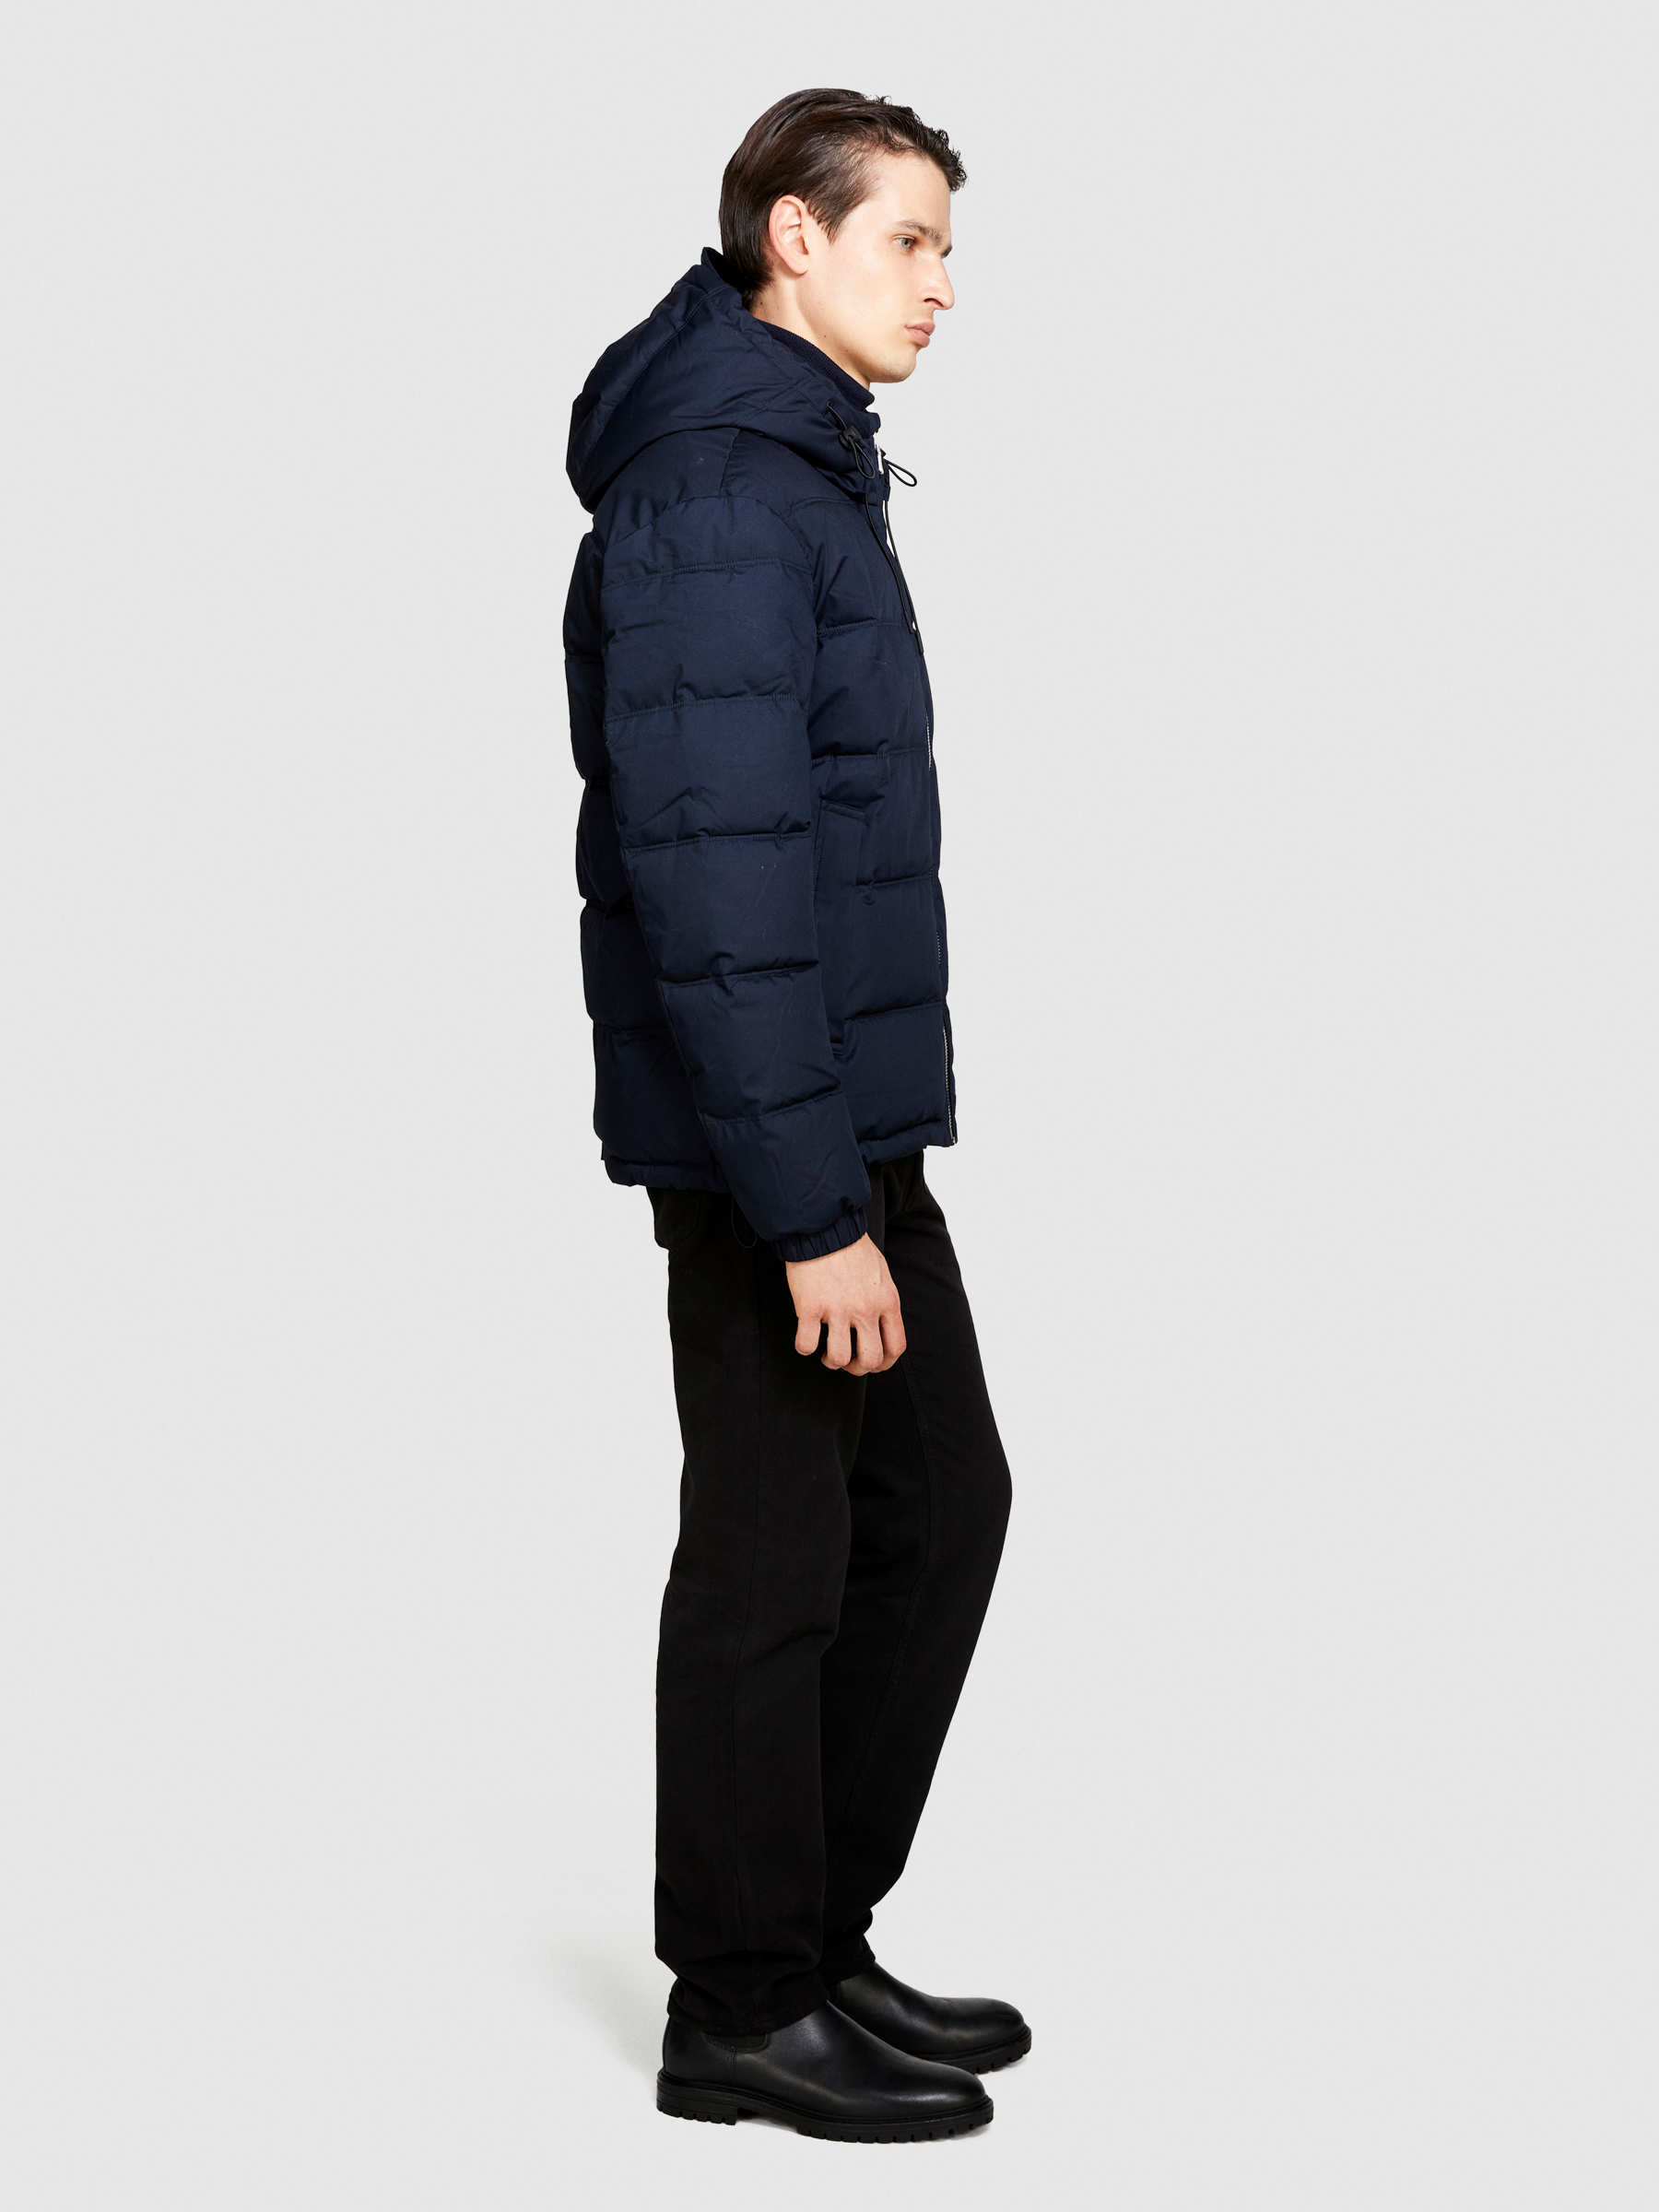 Sisley - Padded Jacket With Hood, Man, Dark Blue, Size: S